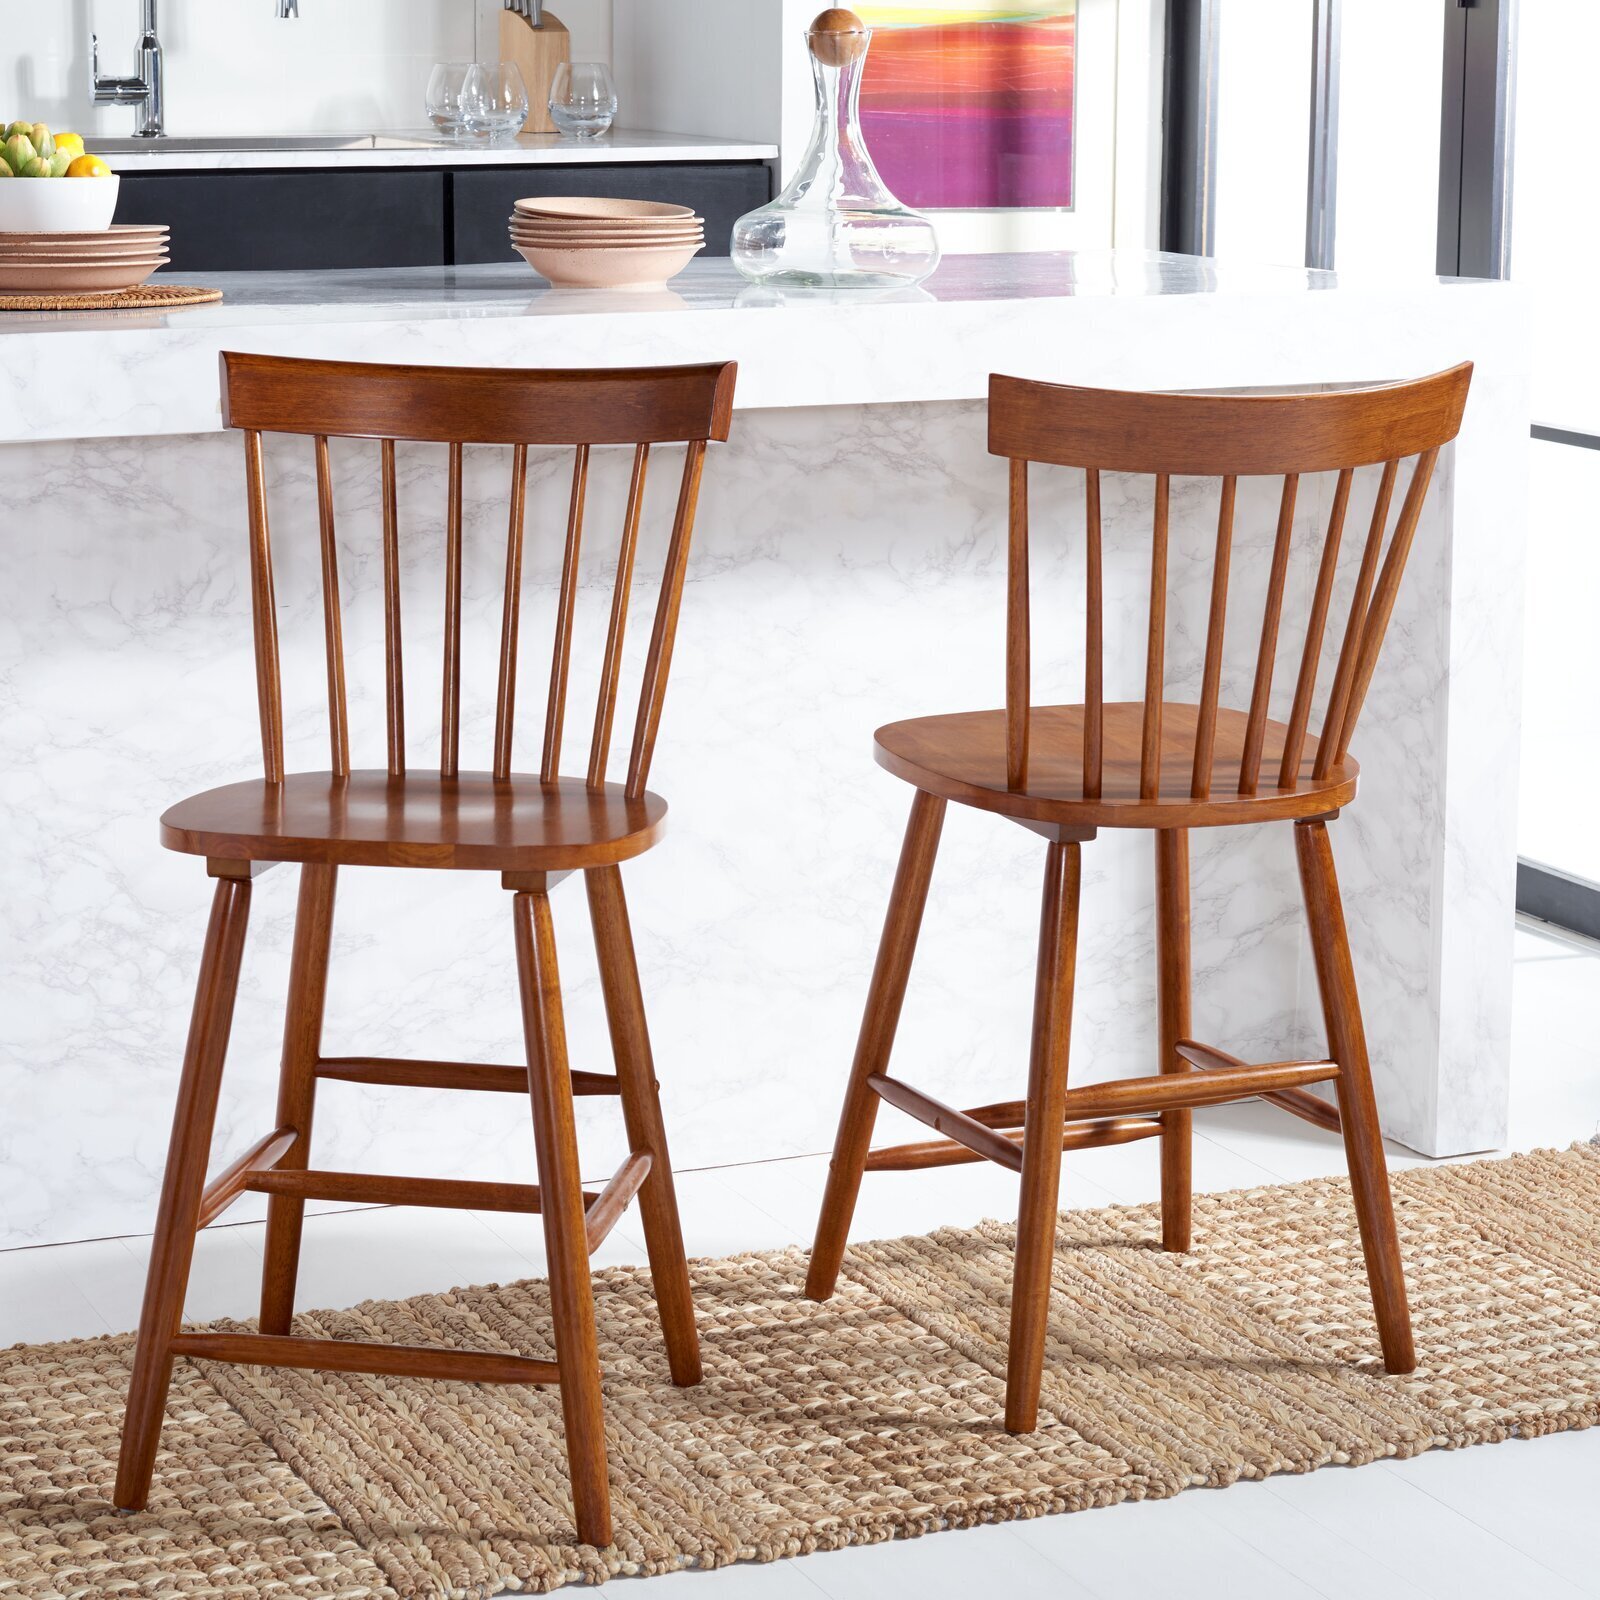 Shaker bar stools with backrests